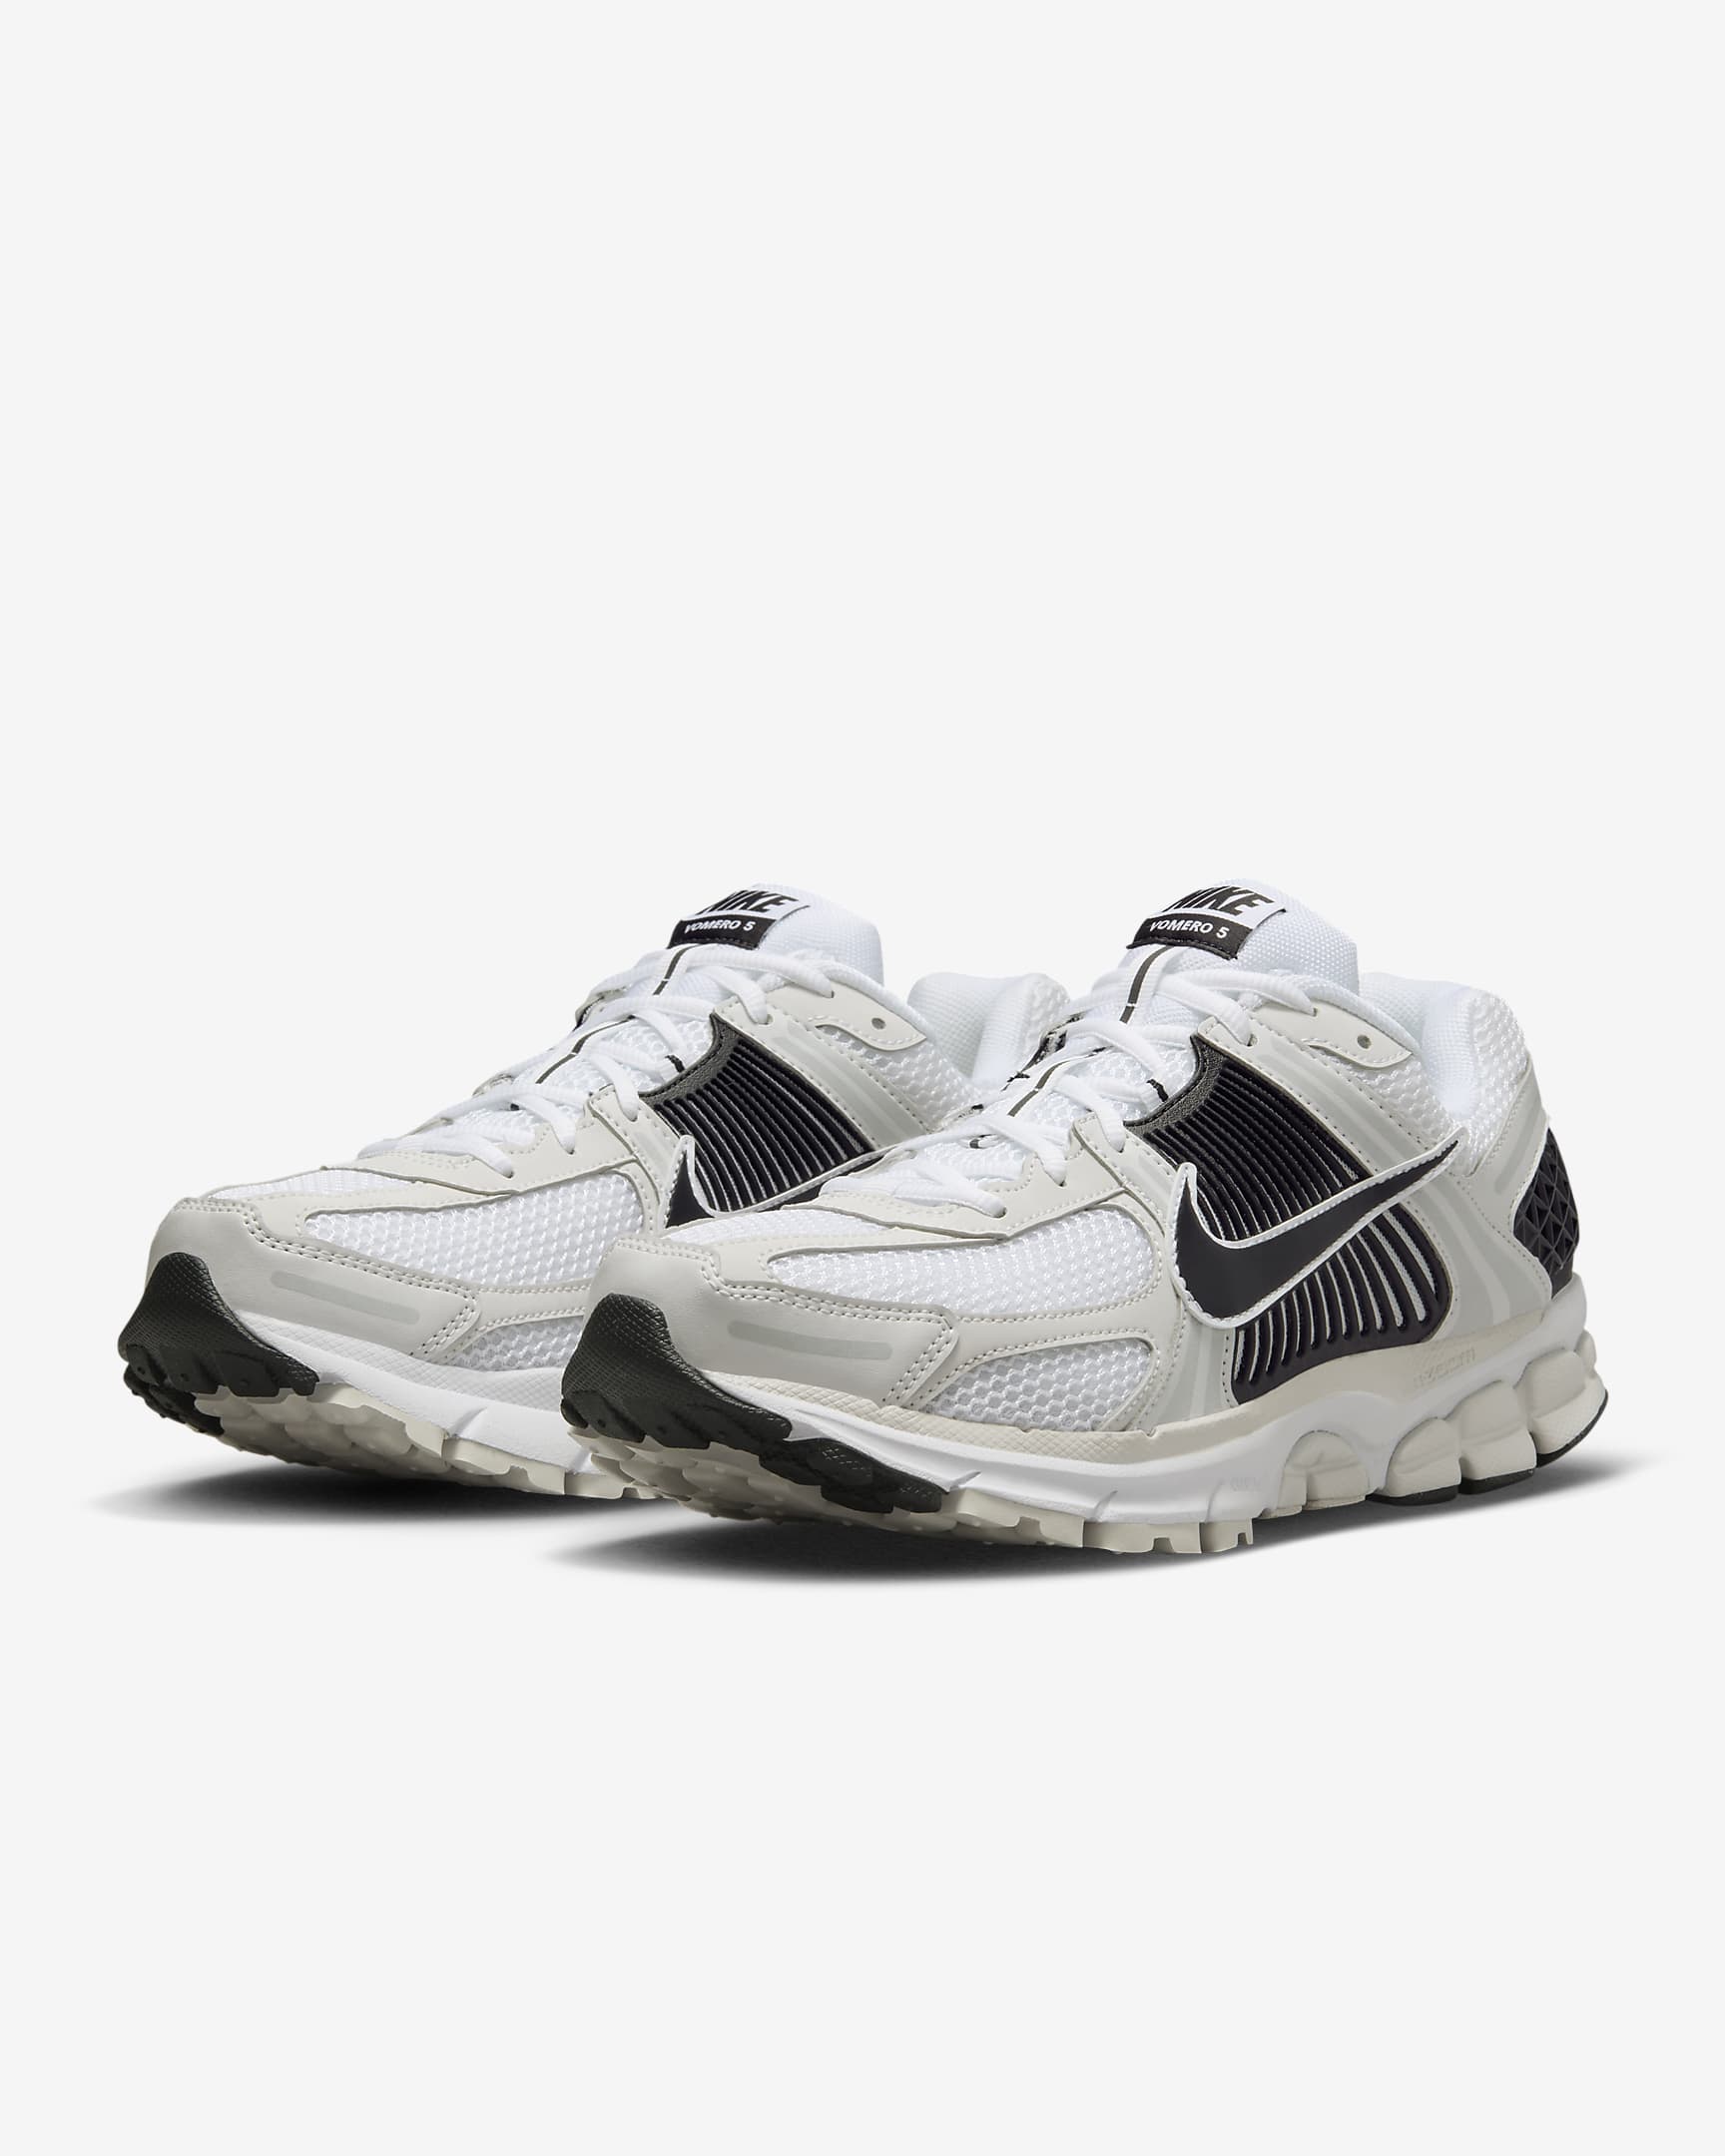 Nike Zoom Vomero 5 Men's Shoes - White/Platinum Tint/Metallic Platinum/Black